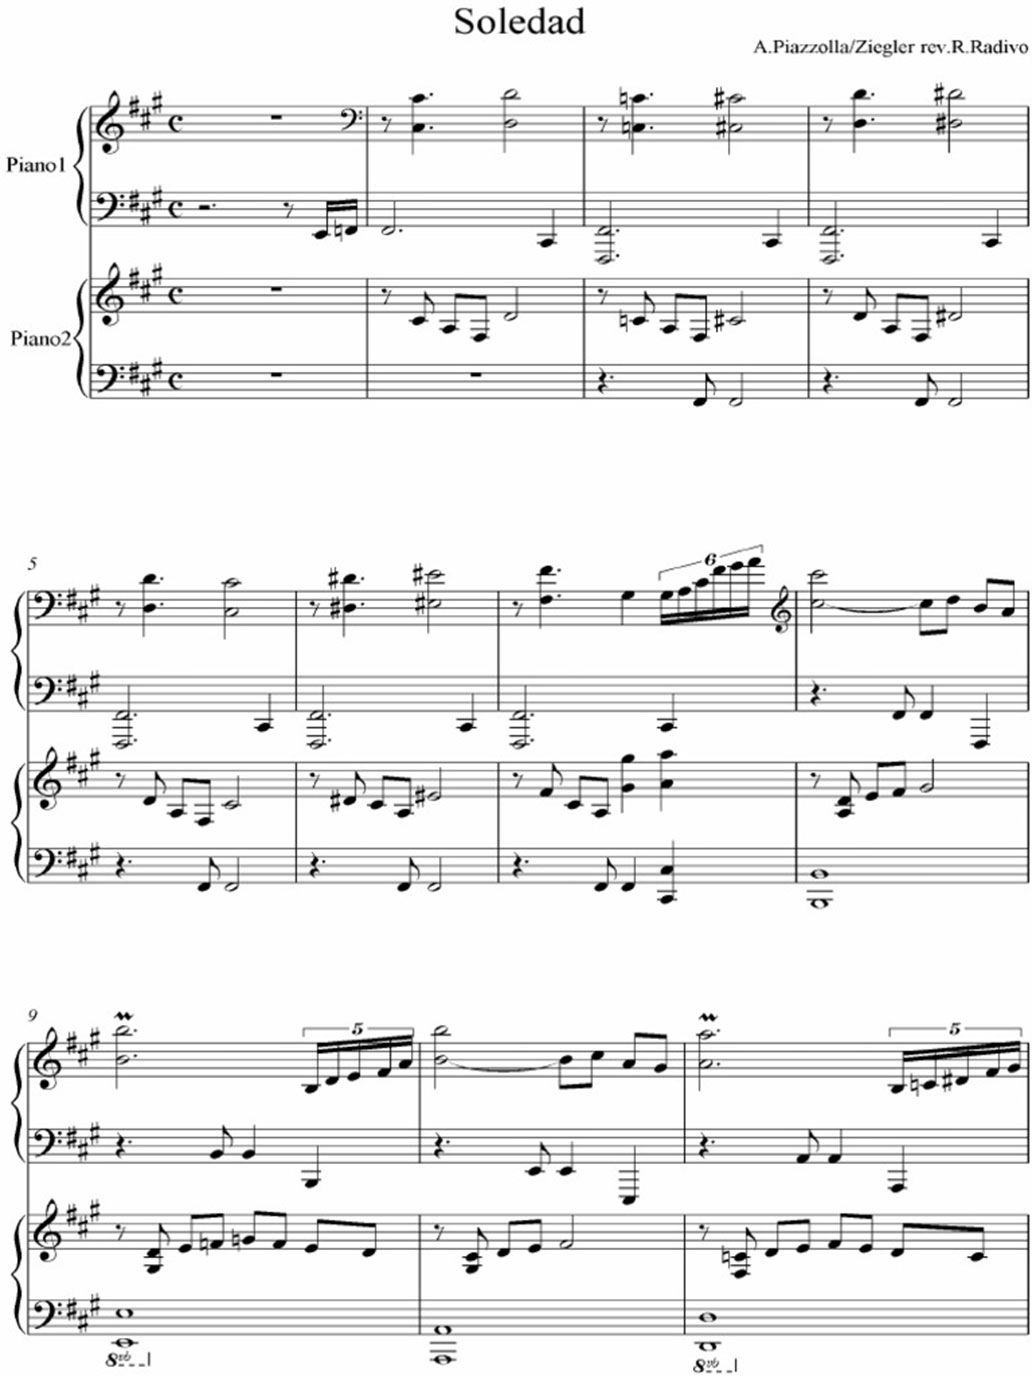 soledad piano sheet music notes